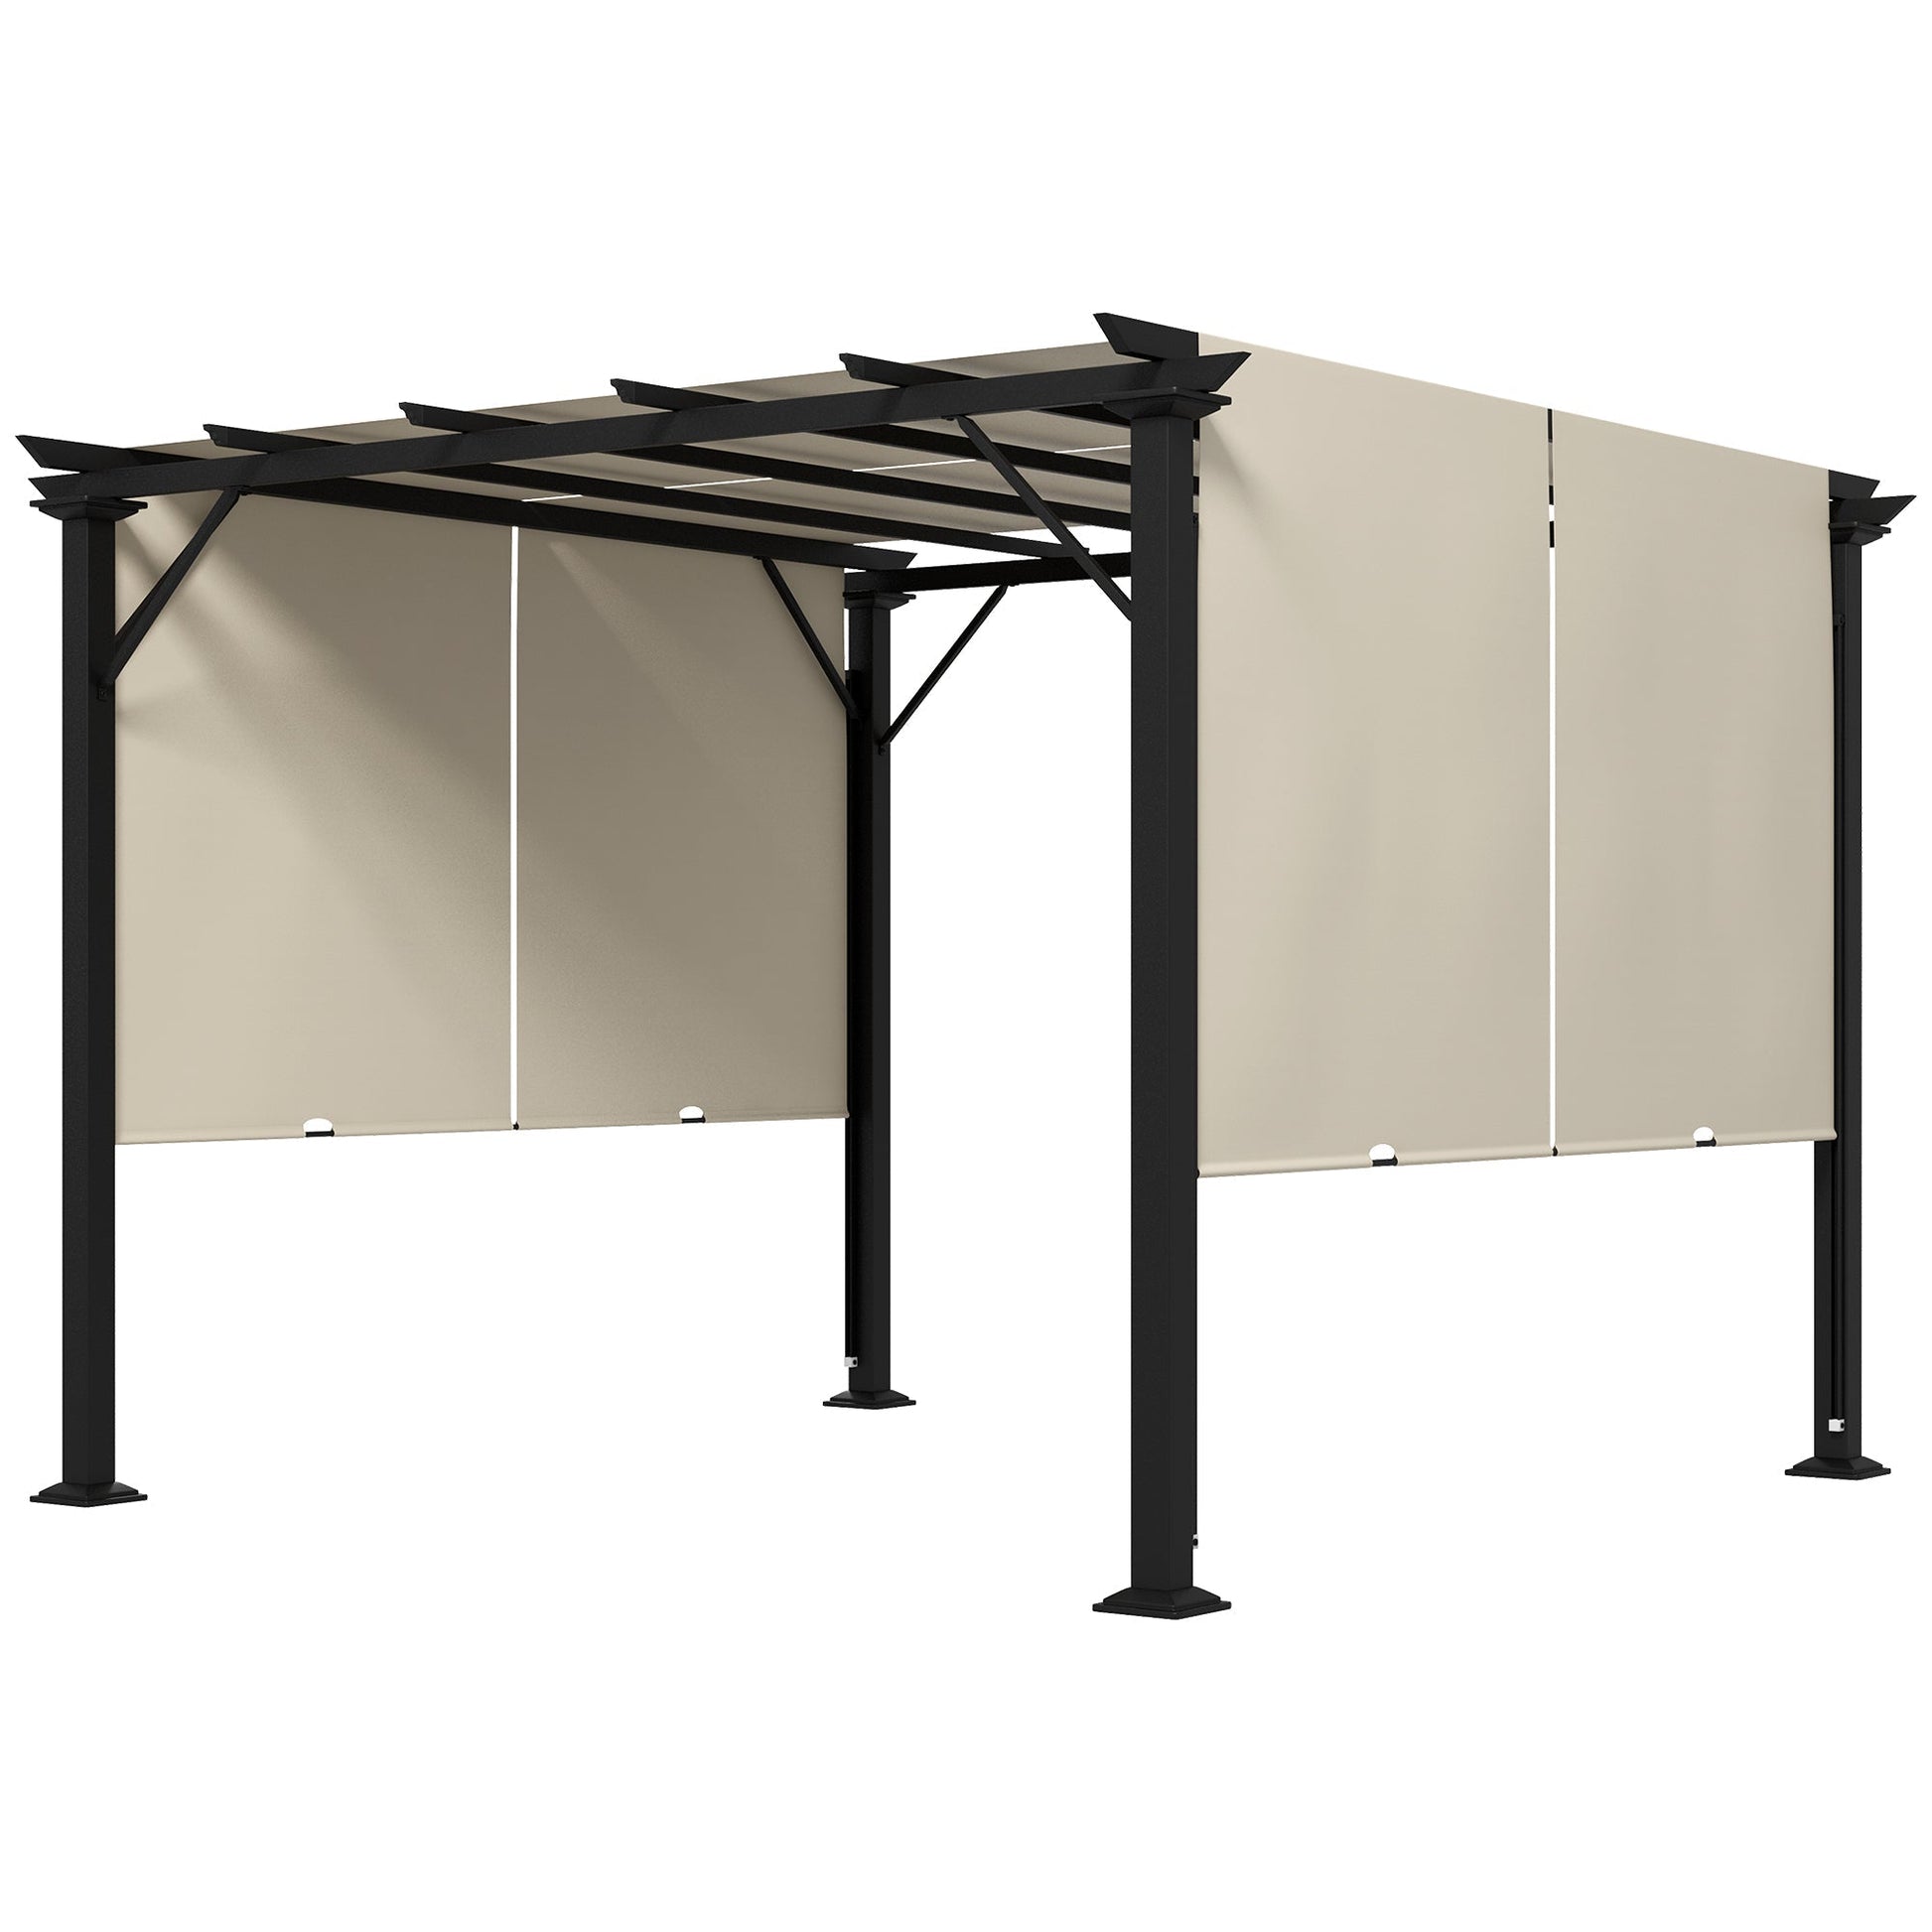 10' x 10' Retractable Pergola Canopy for Backyard, Beige - Gallery Canada